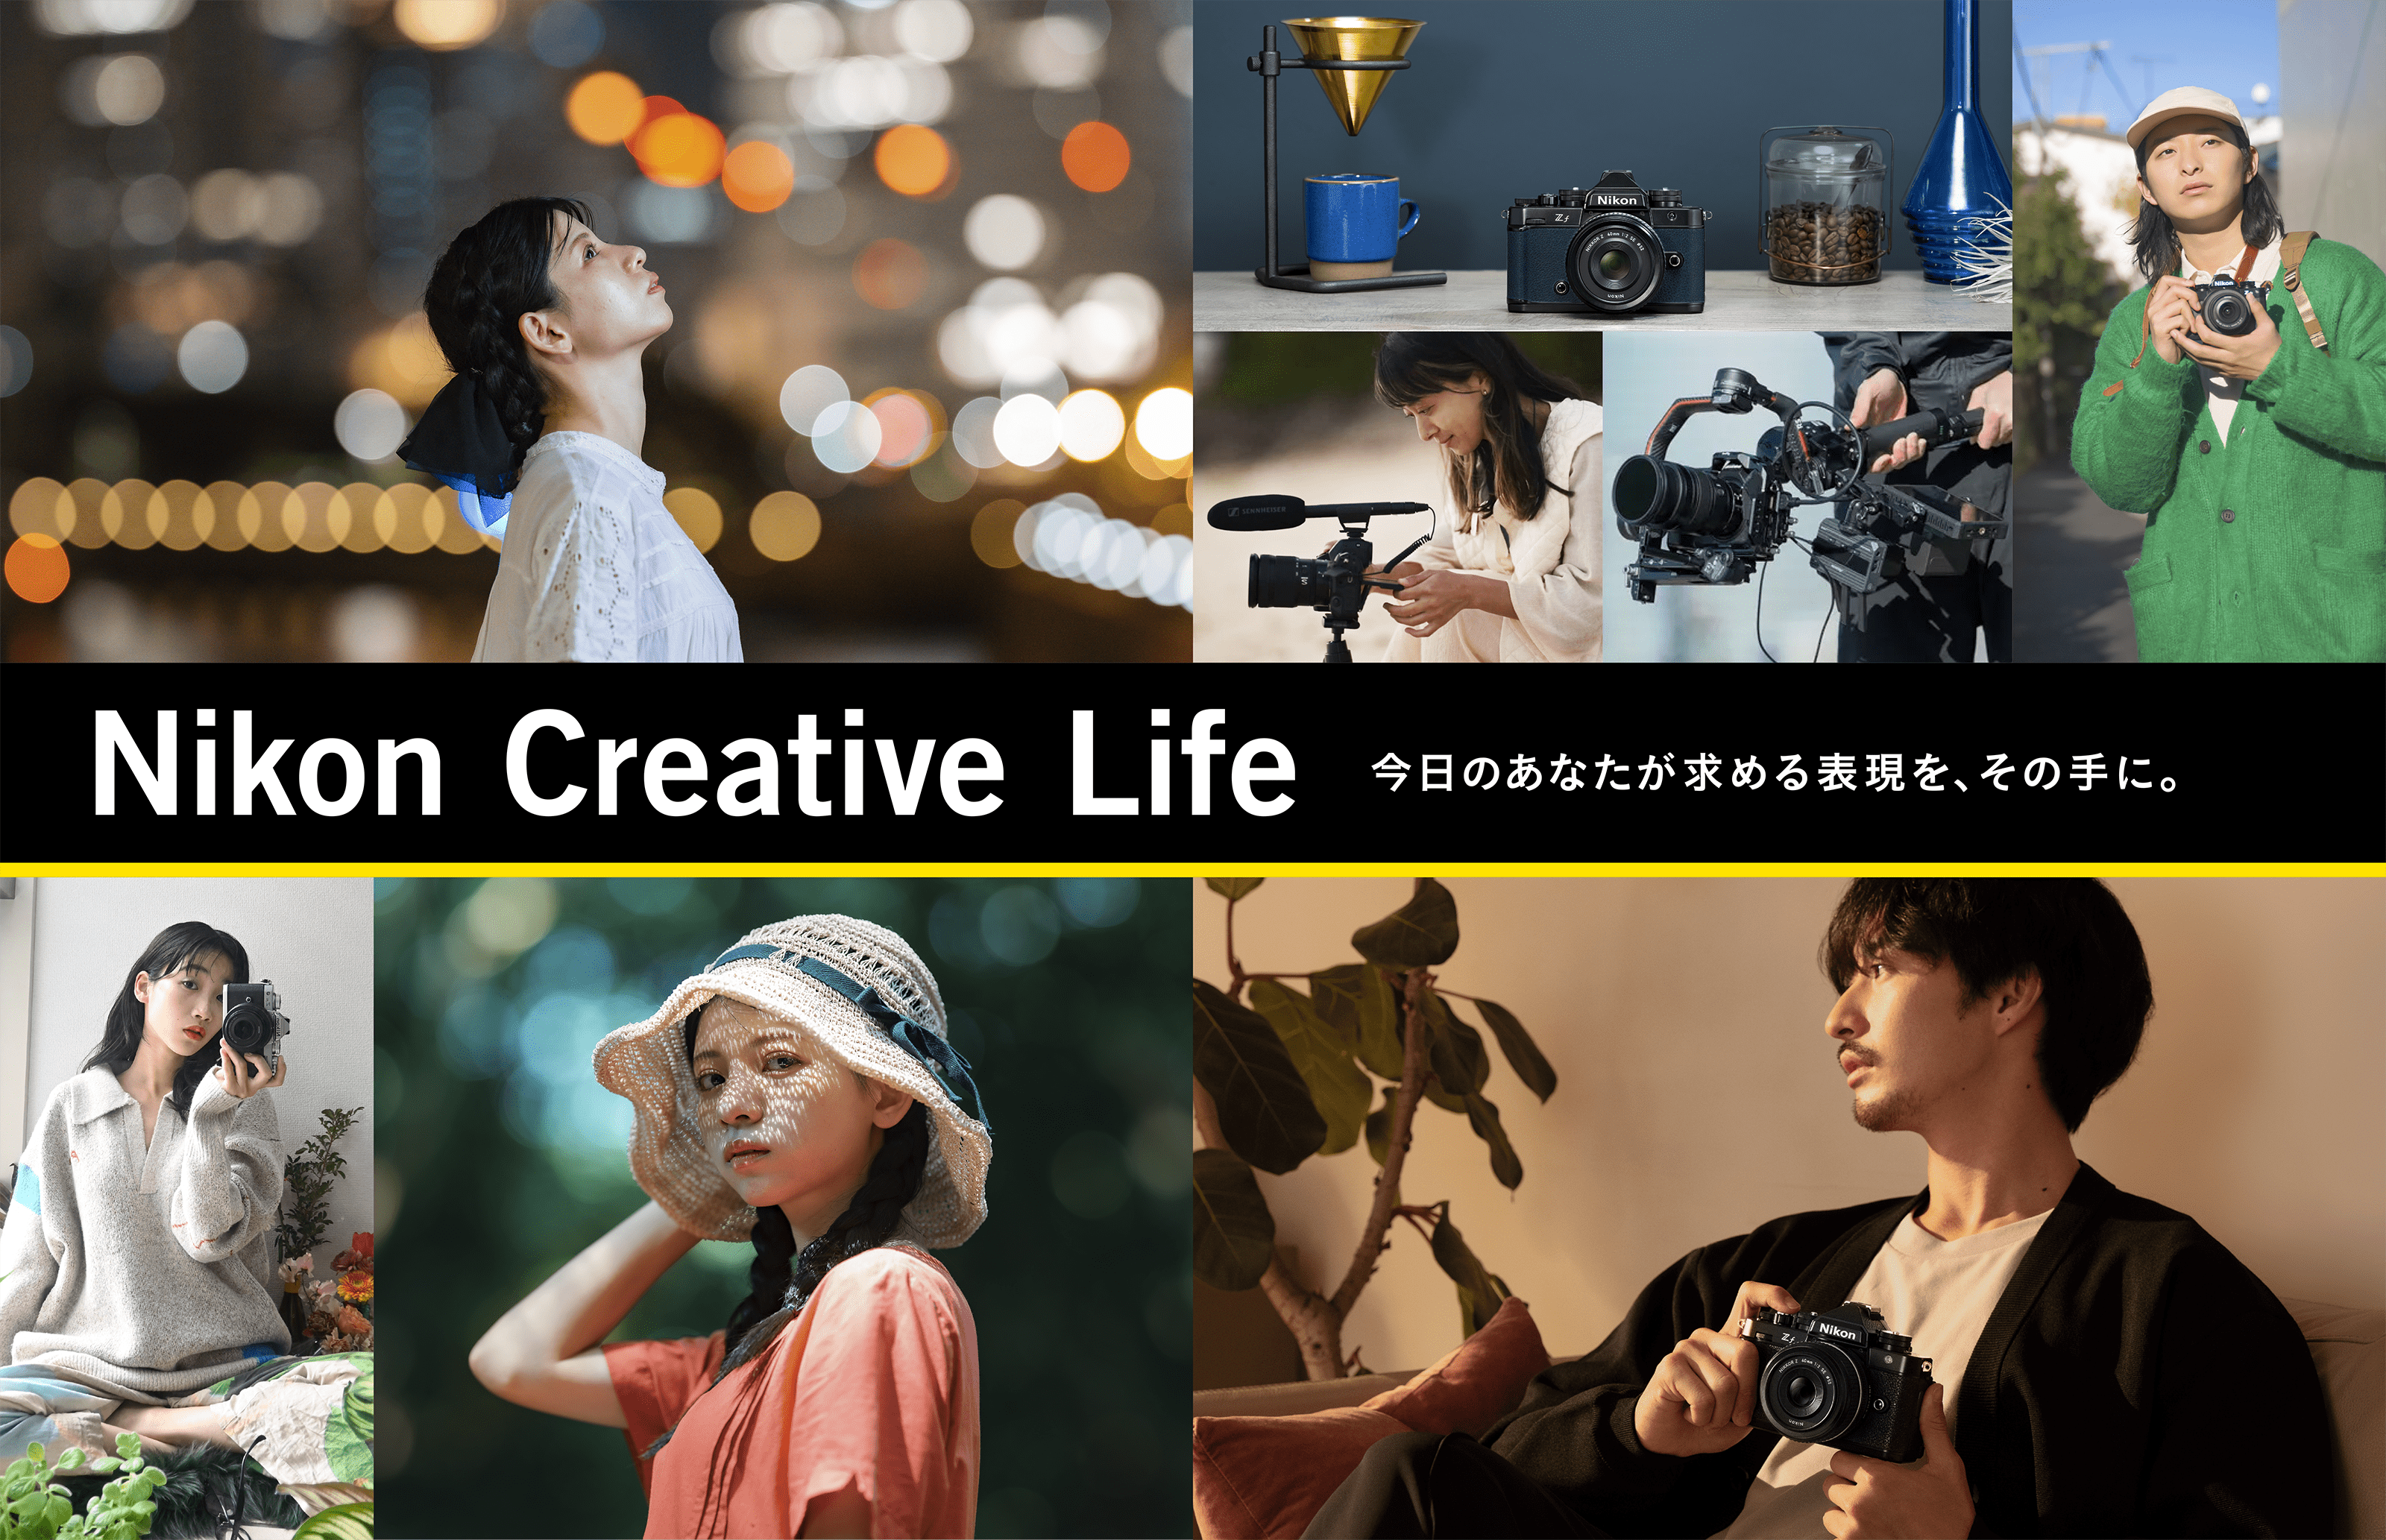 Nikon Creative Life 今日のあなたが求める表現を、その手に。